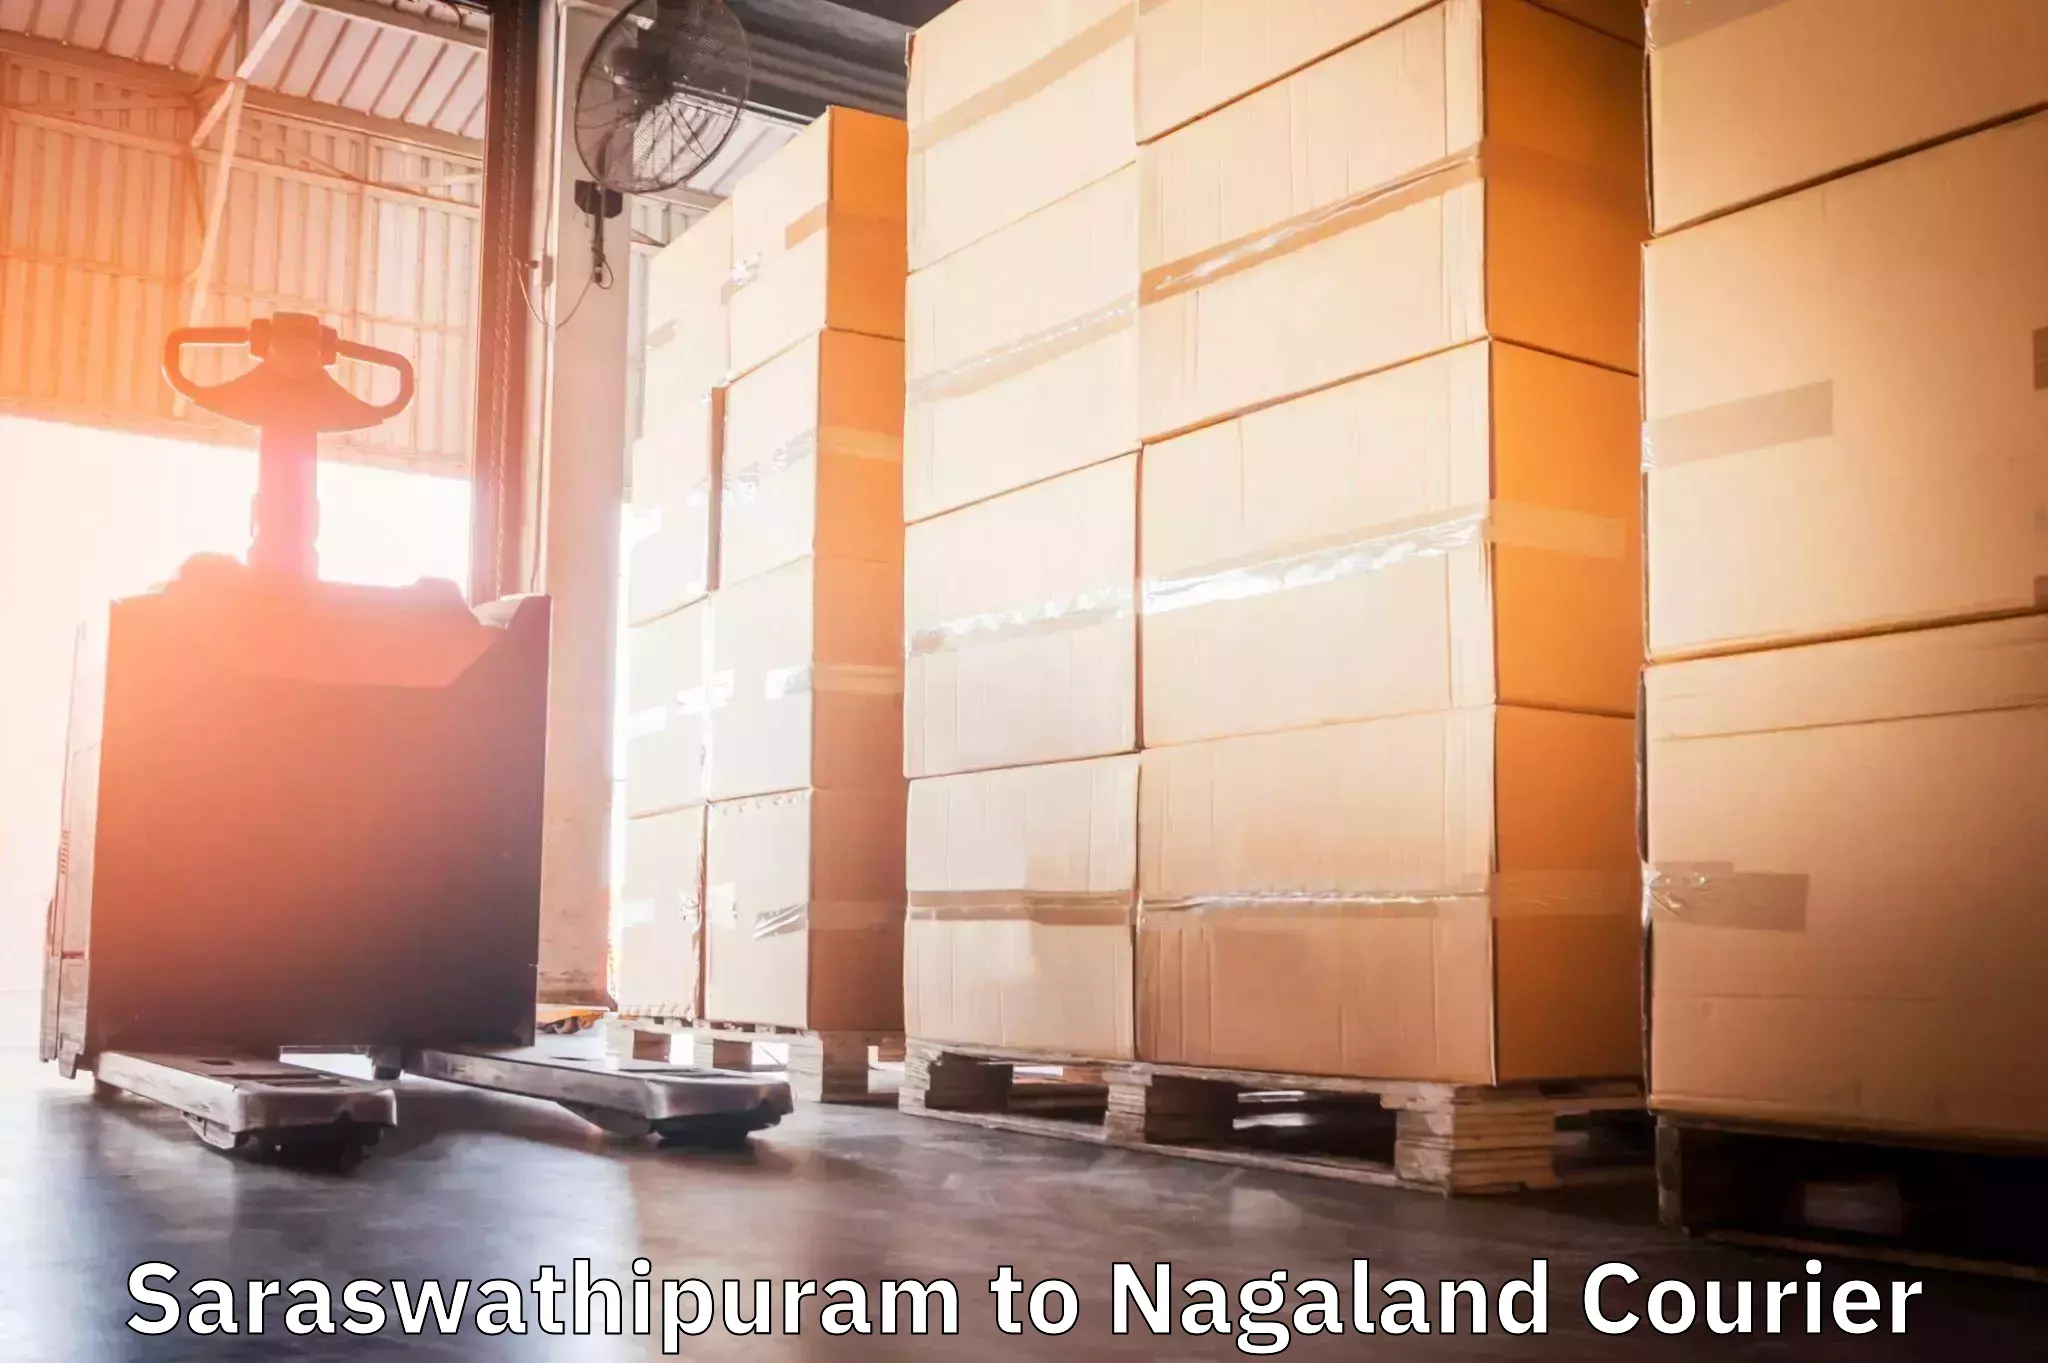 Advanced shipping network Saraswathipuram to Nagaland